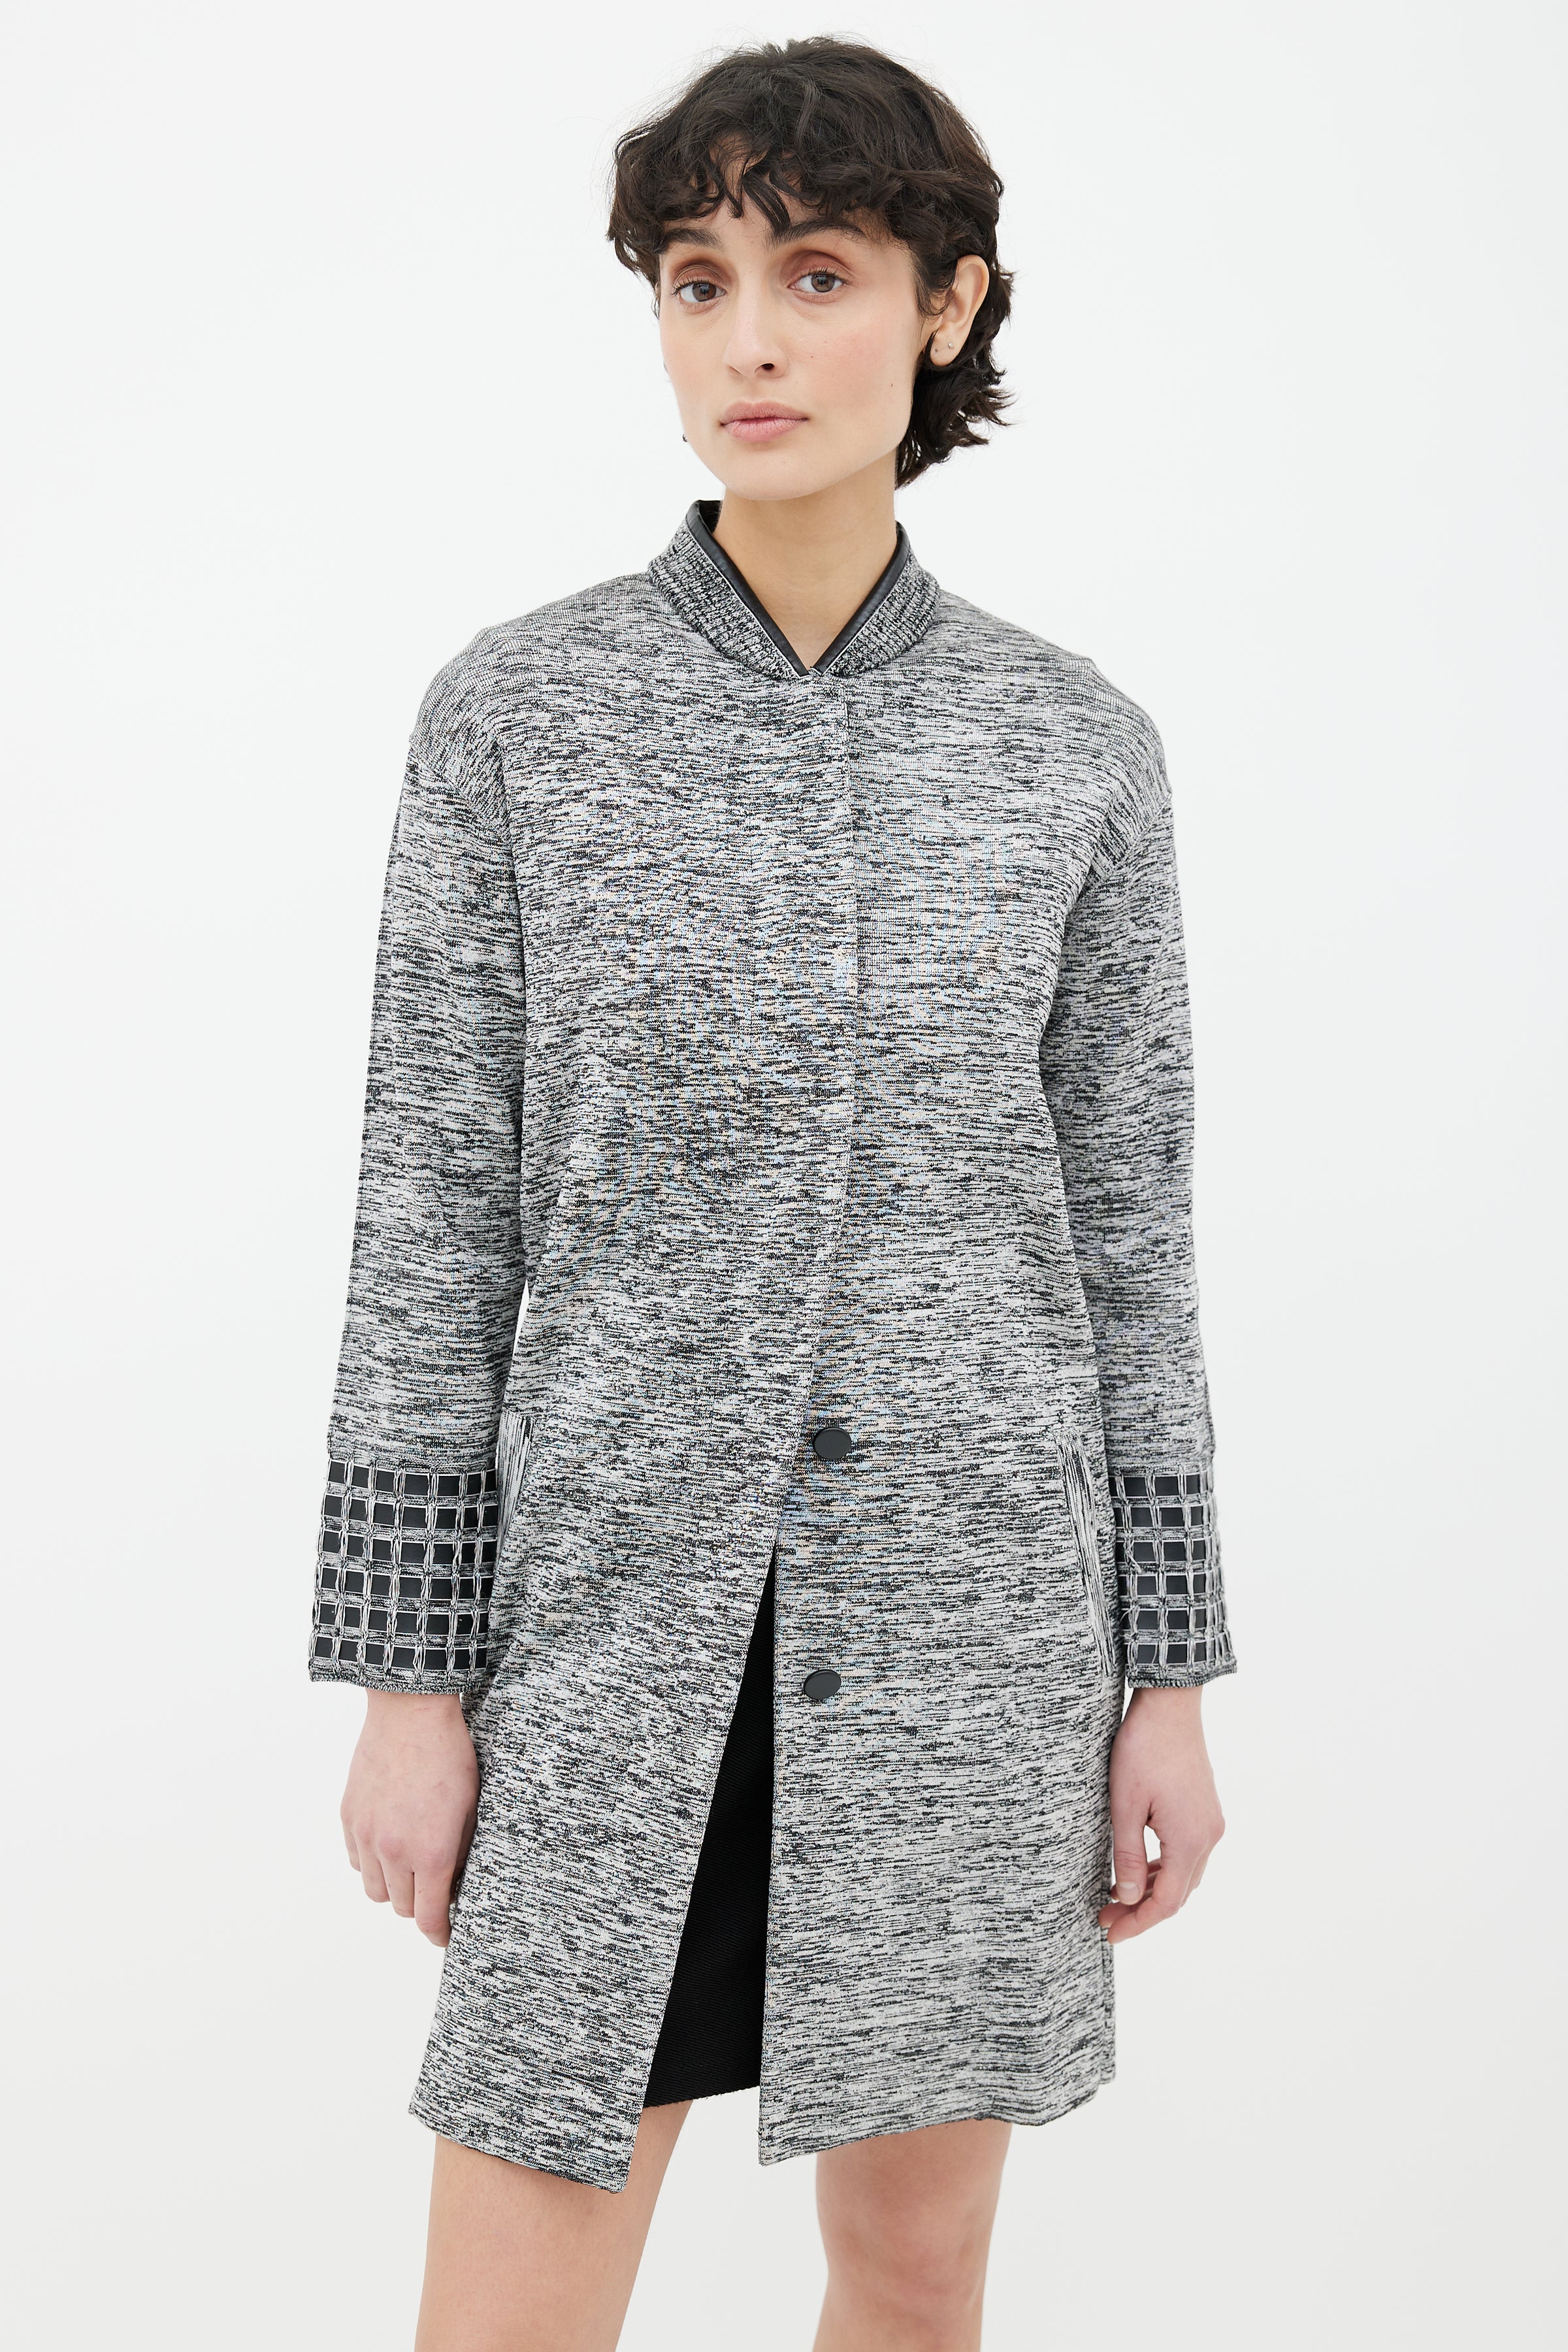 Louis Vuitton // Grey & Black Leather Knit Jacket – VSP Consignment